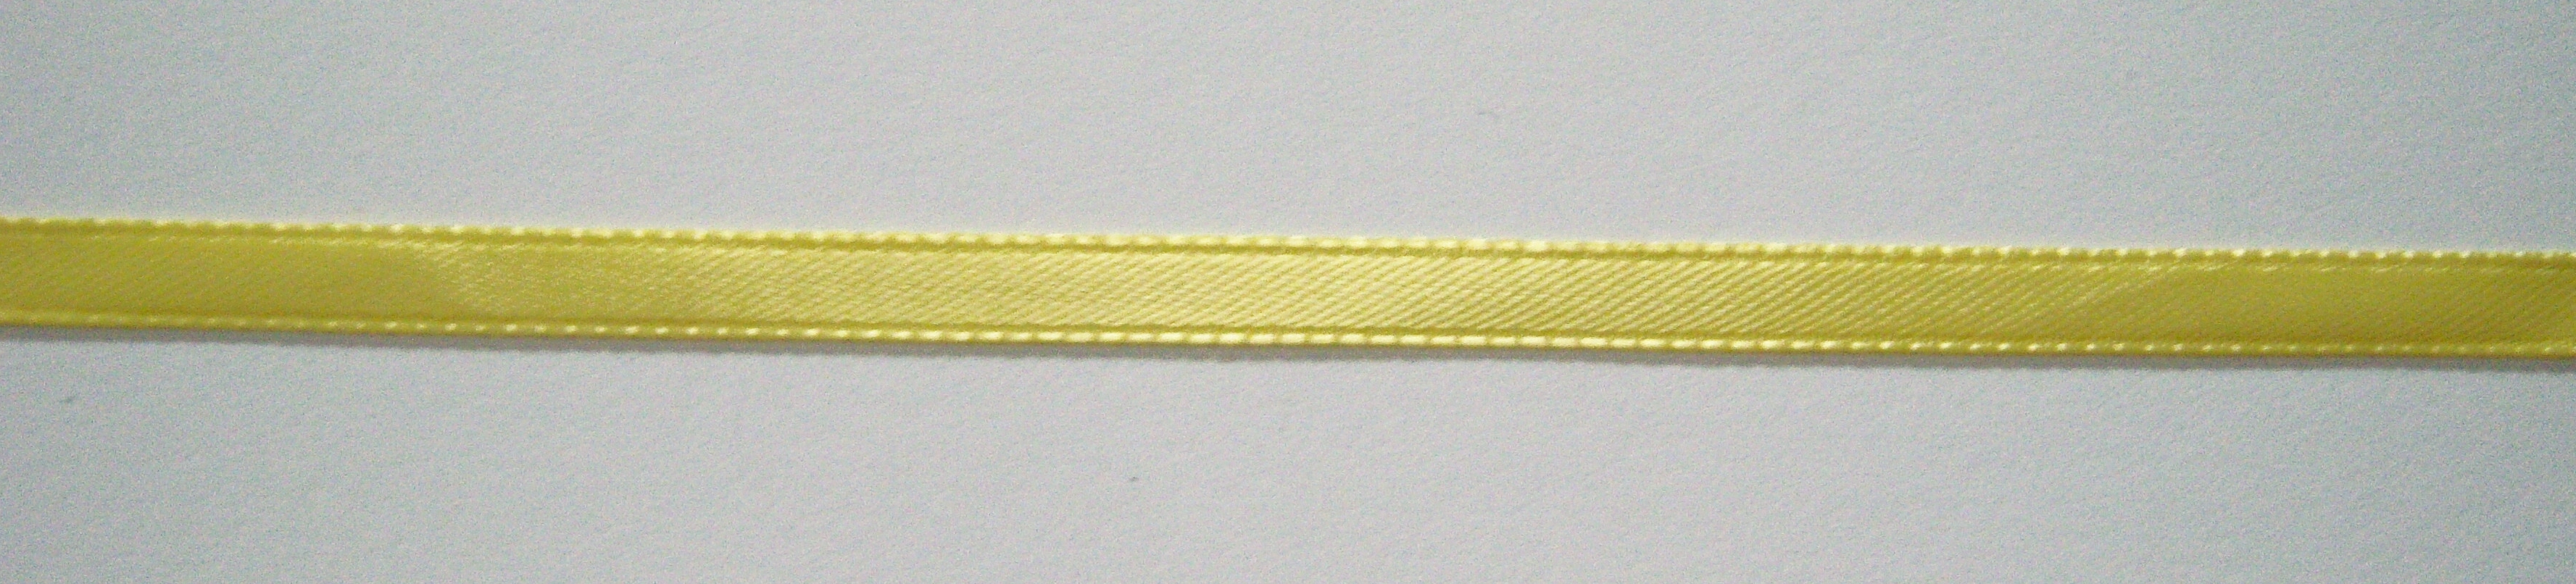 Yellow 1/4" Single Faced Satin Ribbon